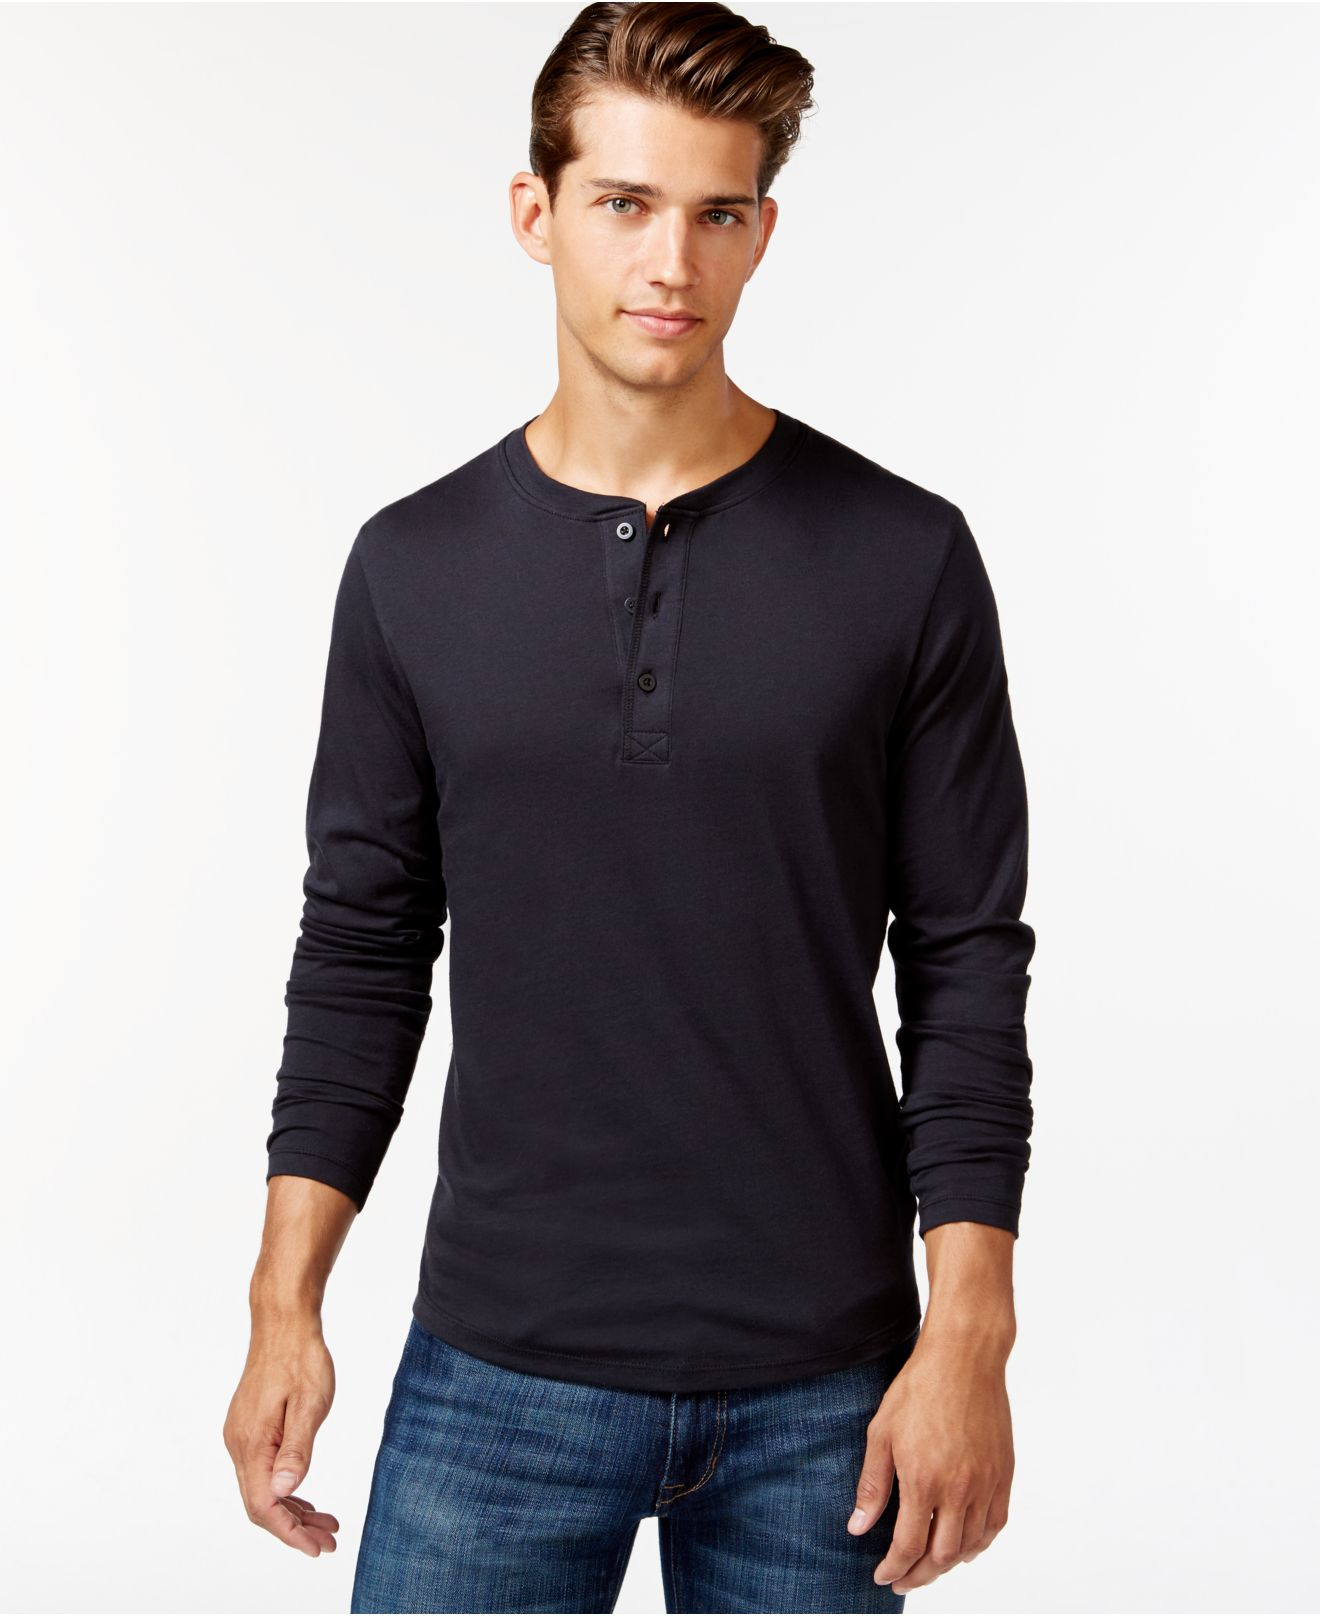 Alternative Apparel Cotton Henley Shirt in Black for Men - Lyst